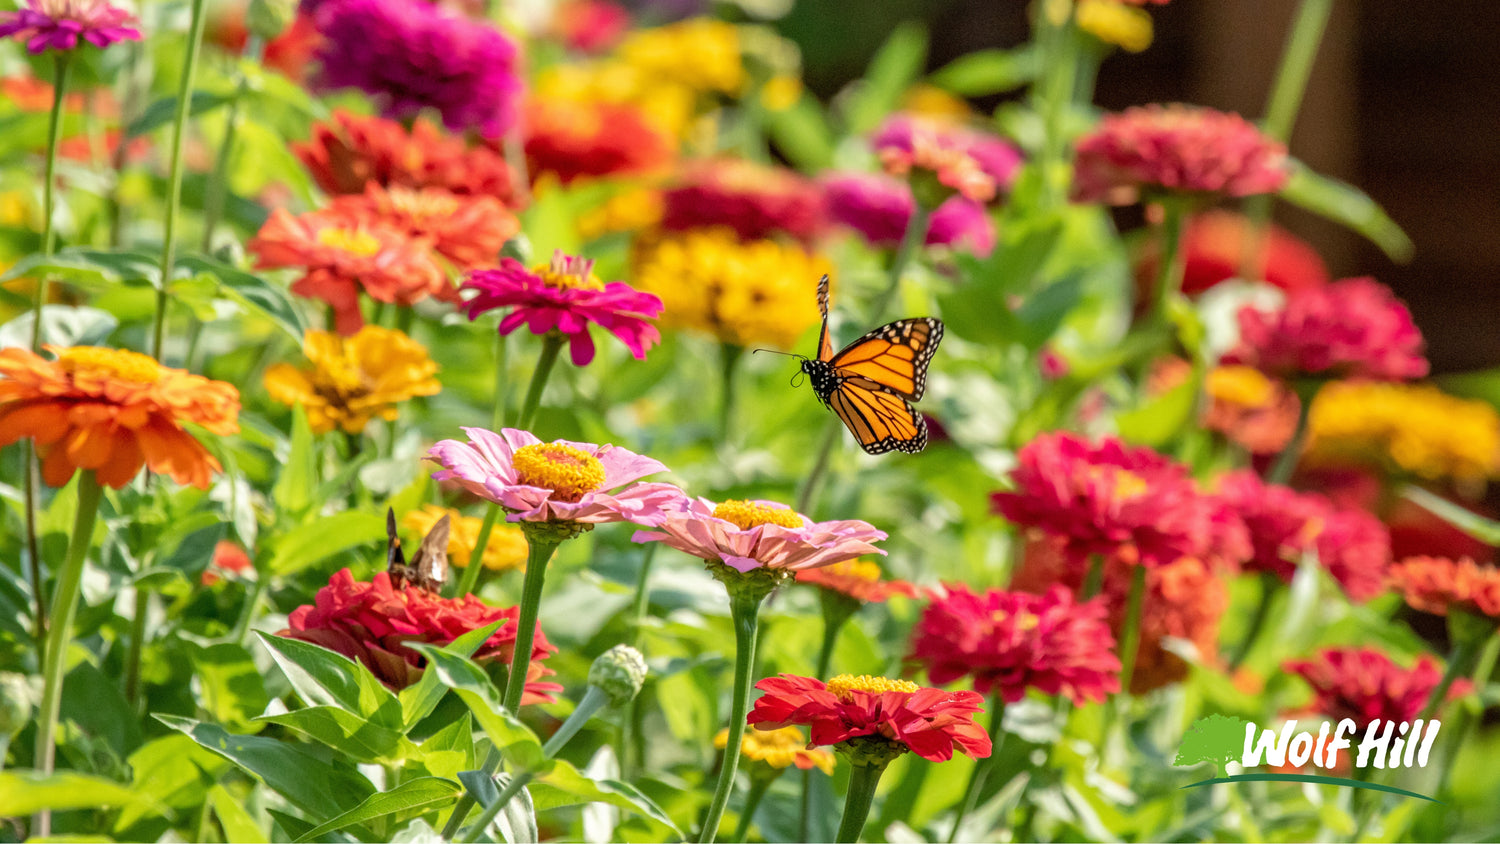 Attracting Pollinators: The Best Plants for Bees, Butterflies, and Hummingbirds in Massachusetts